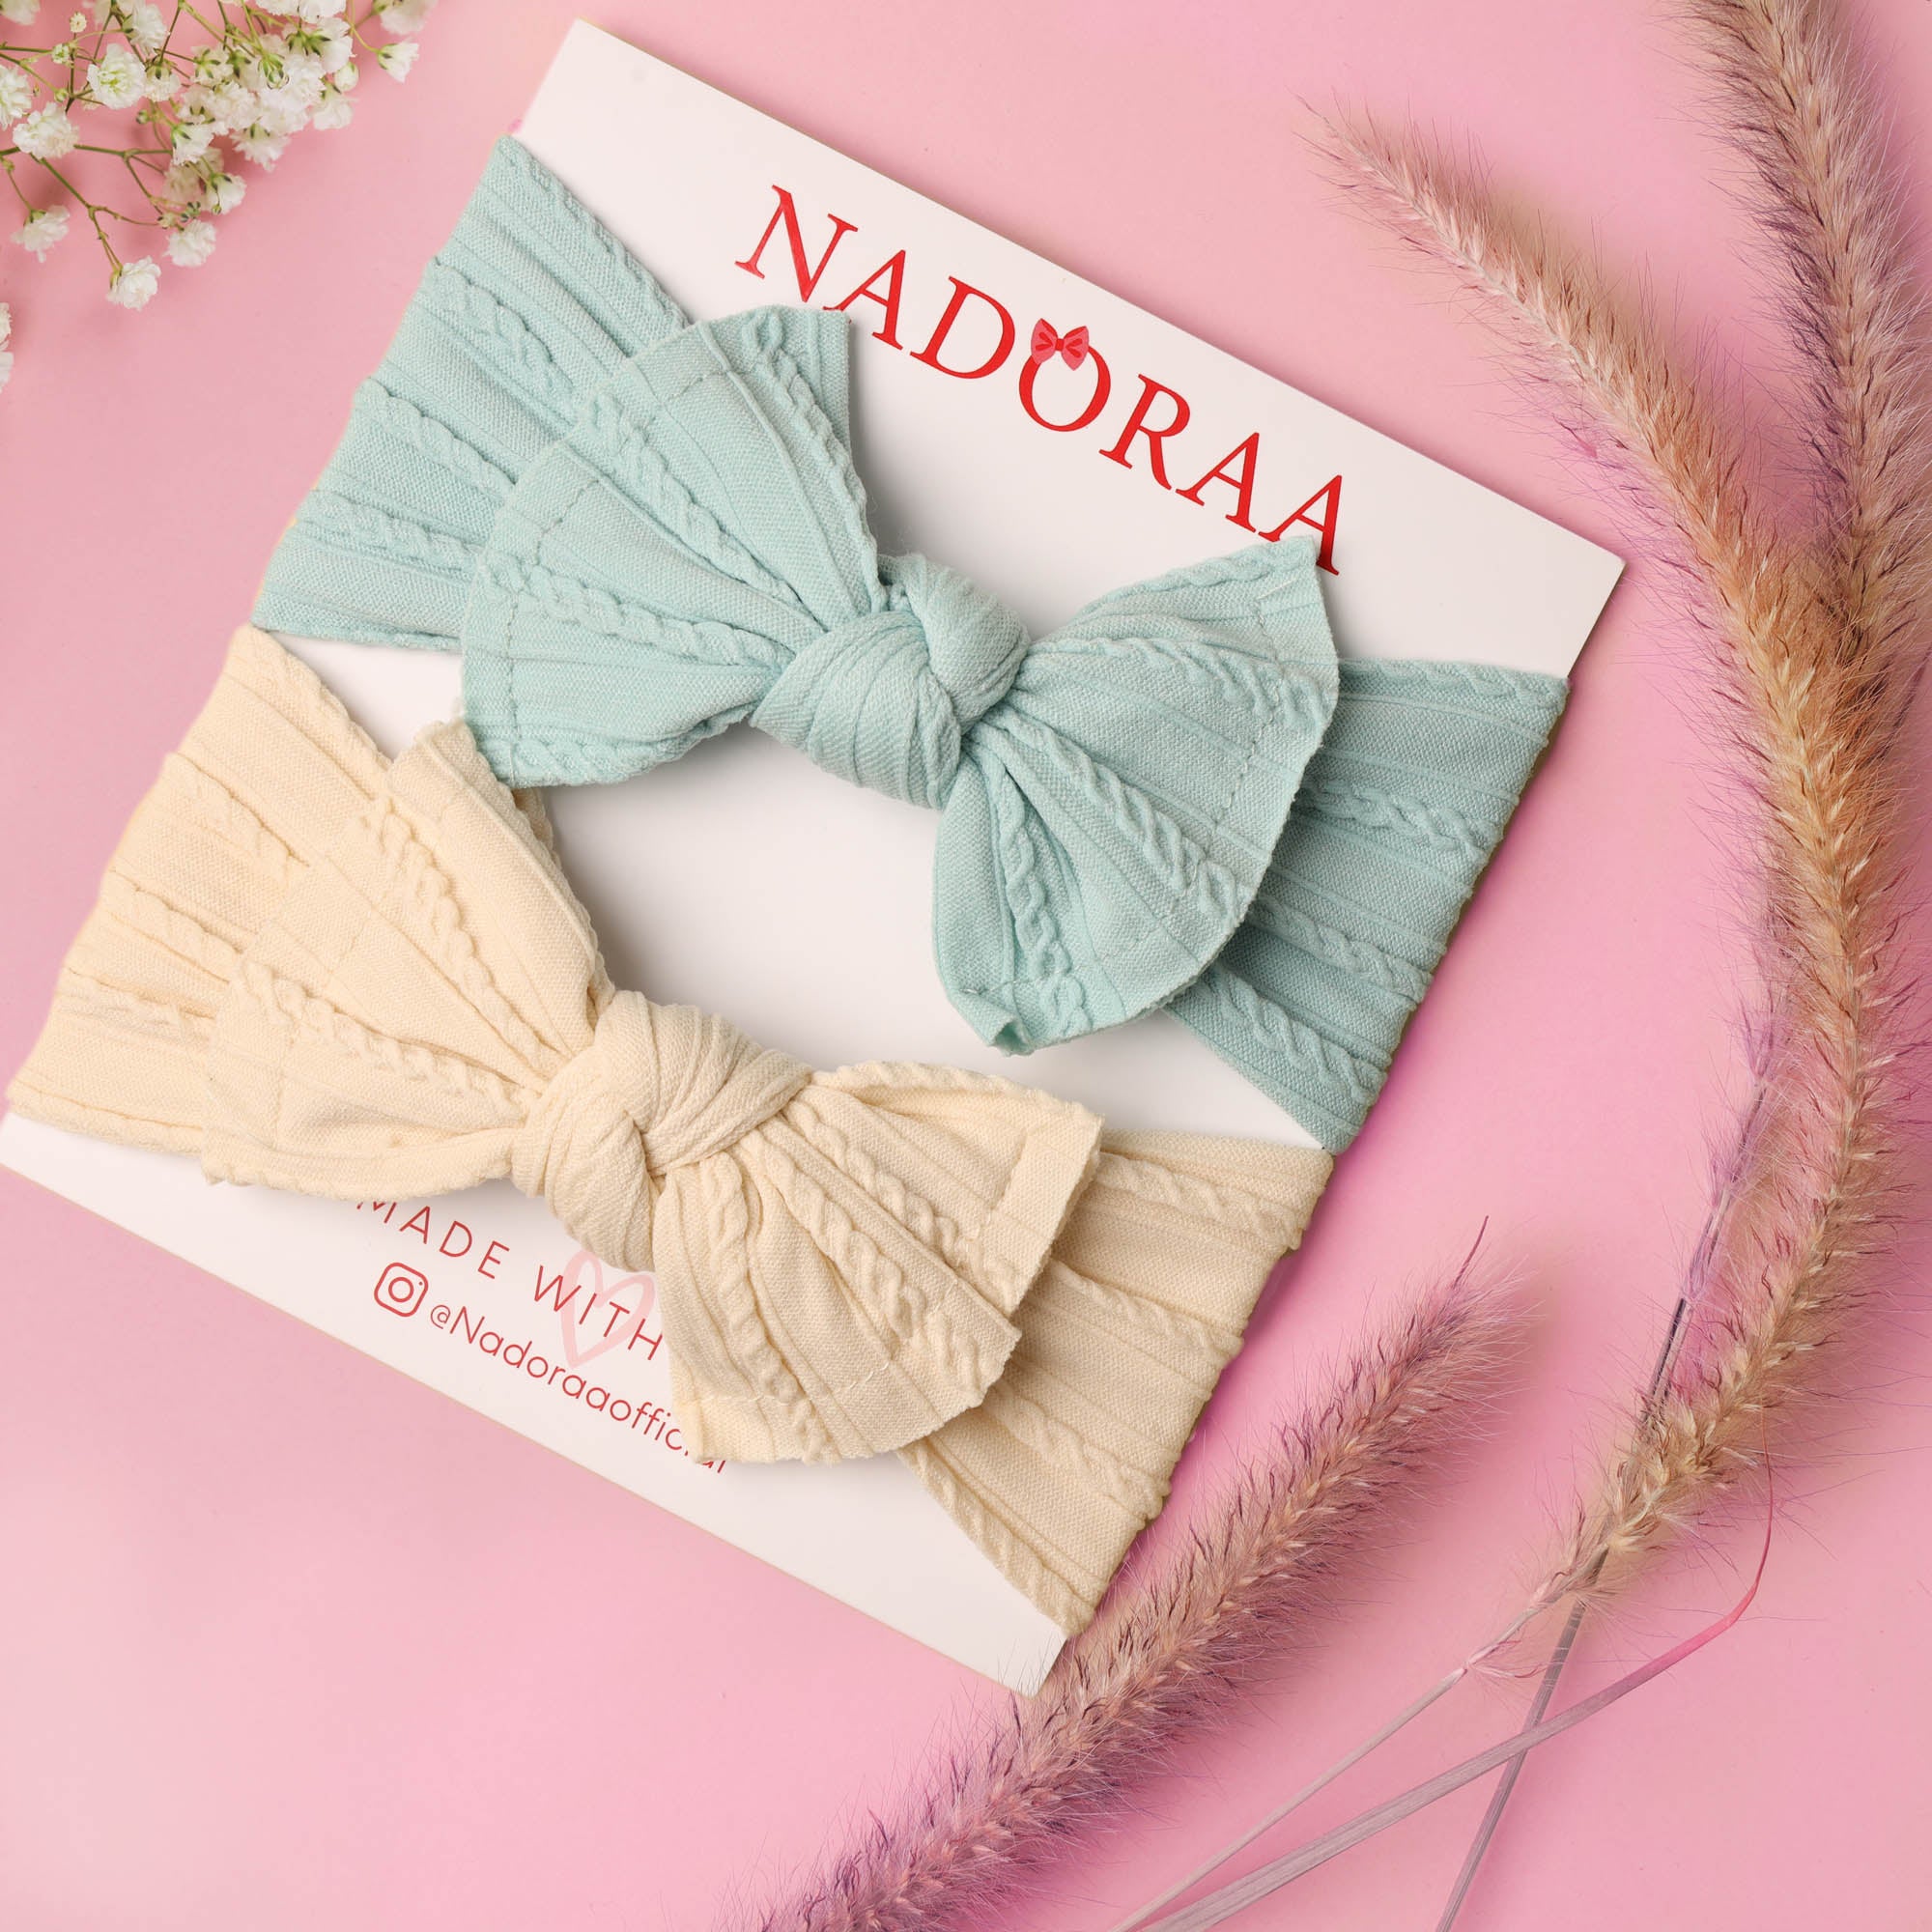 Nadoraa Aqua & Cream Baby Headbands - 2 Pack